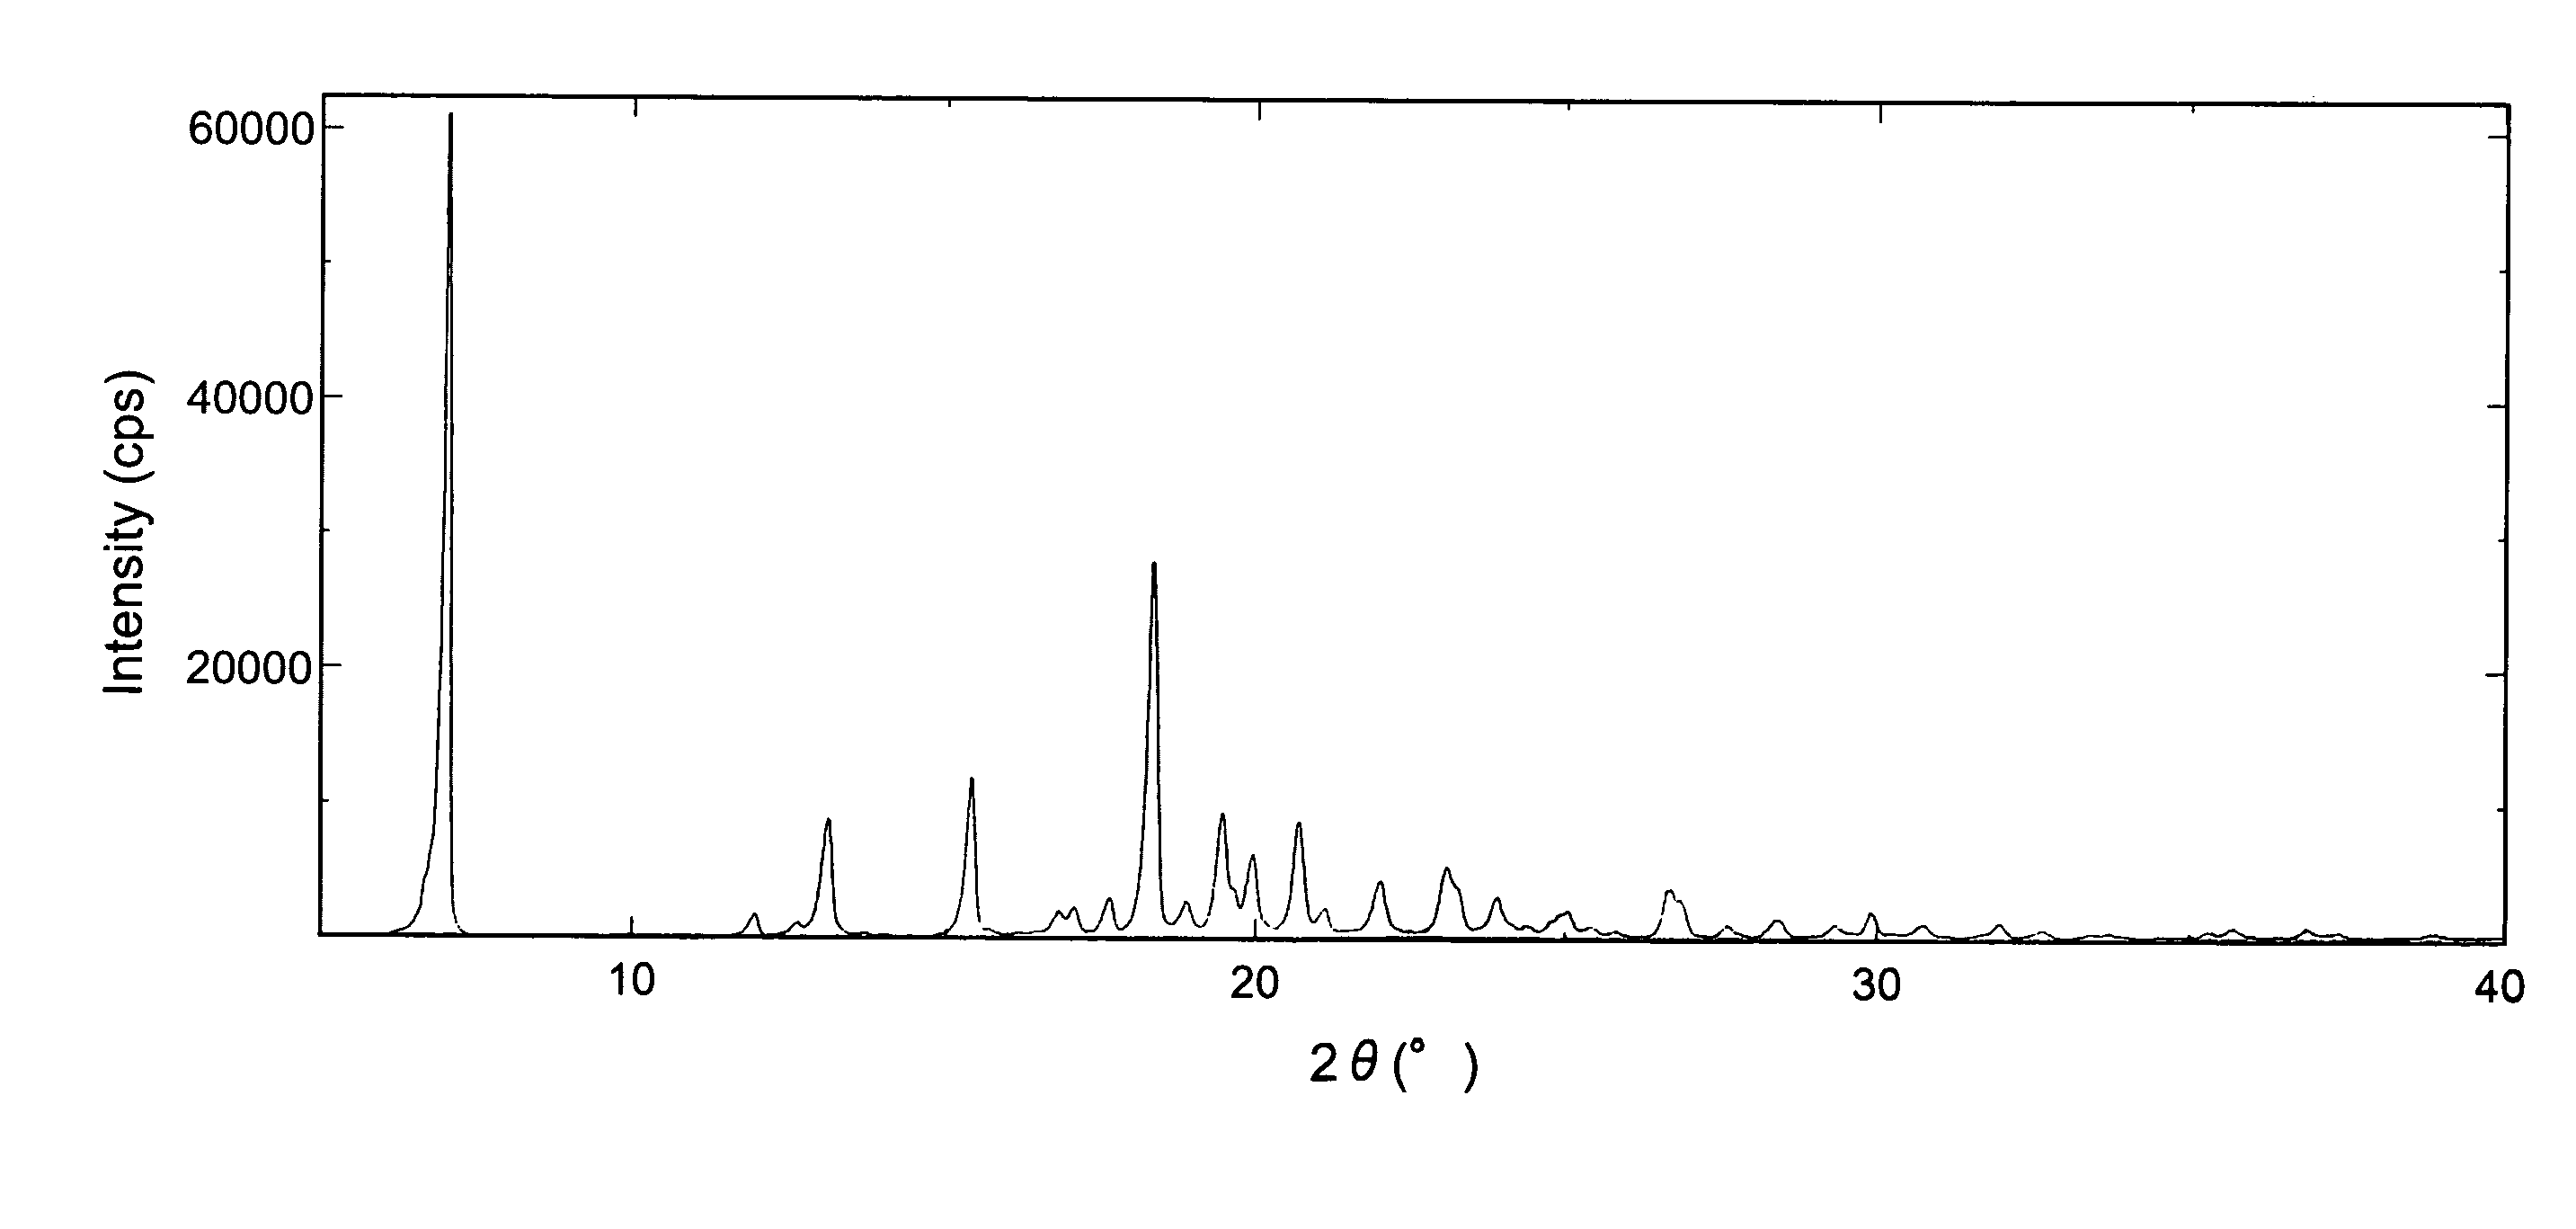 Crystal and Salt of 1-Cyclopropylmethyl-4-[2-(3,3,5,5-Tetramethylcyclohexyl)Phenyl]Piperazine